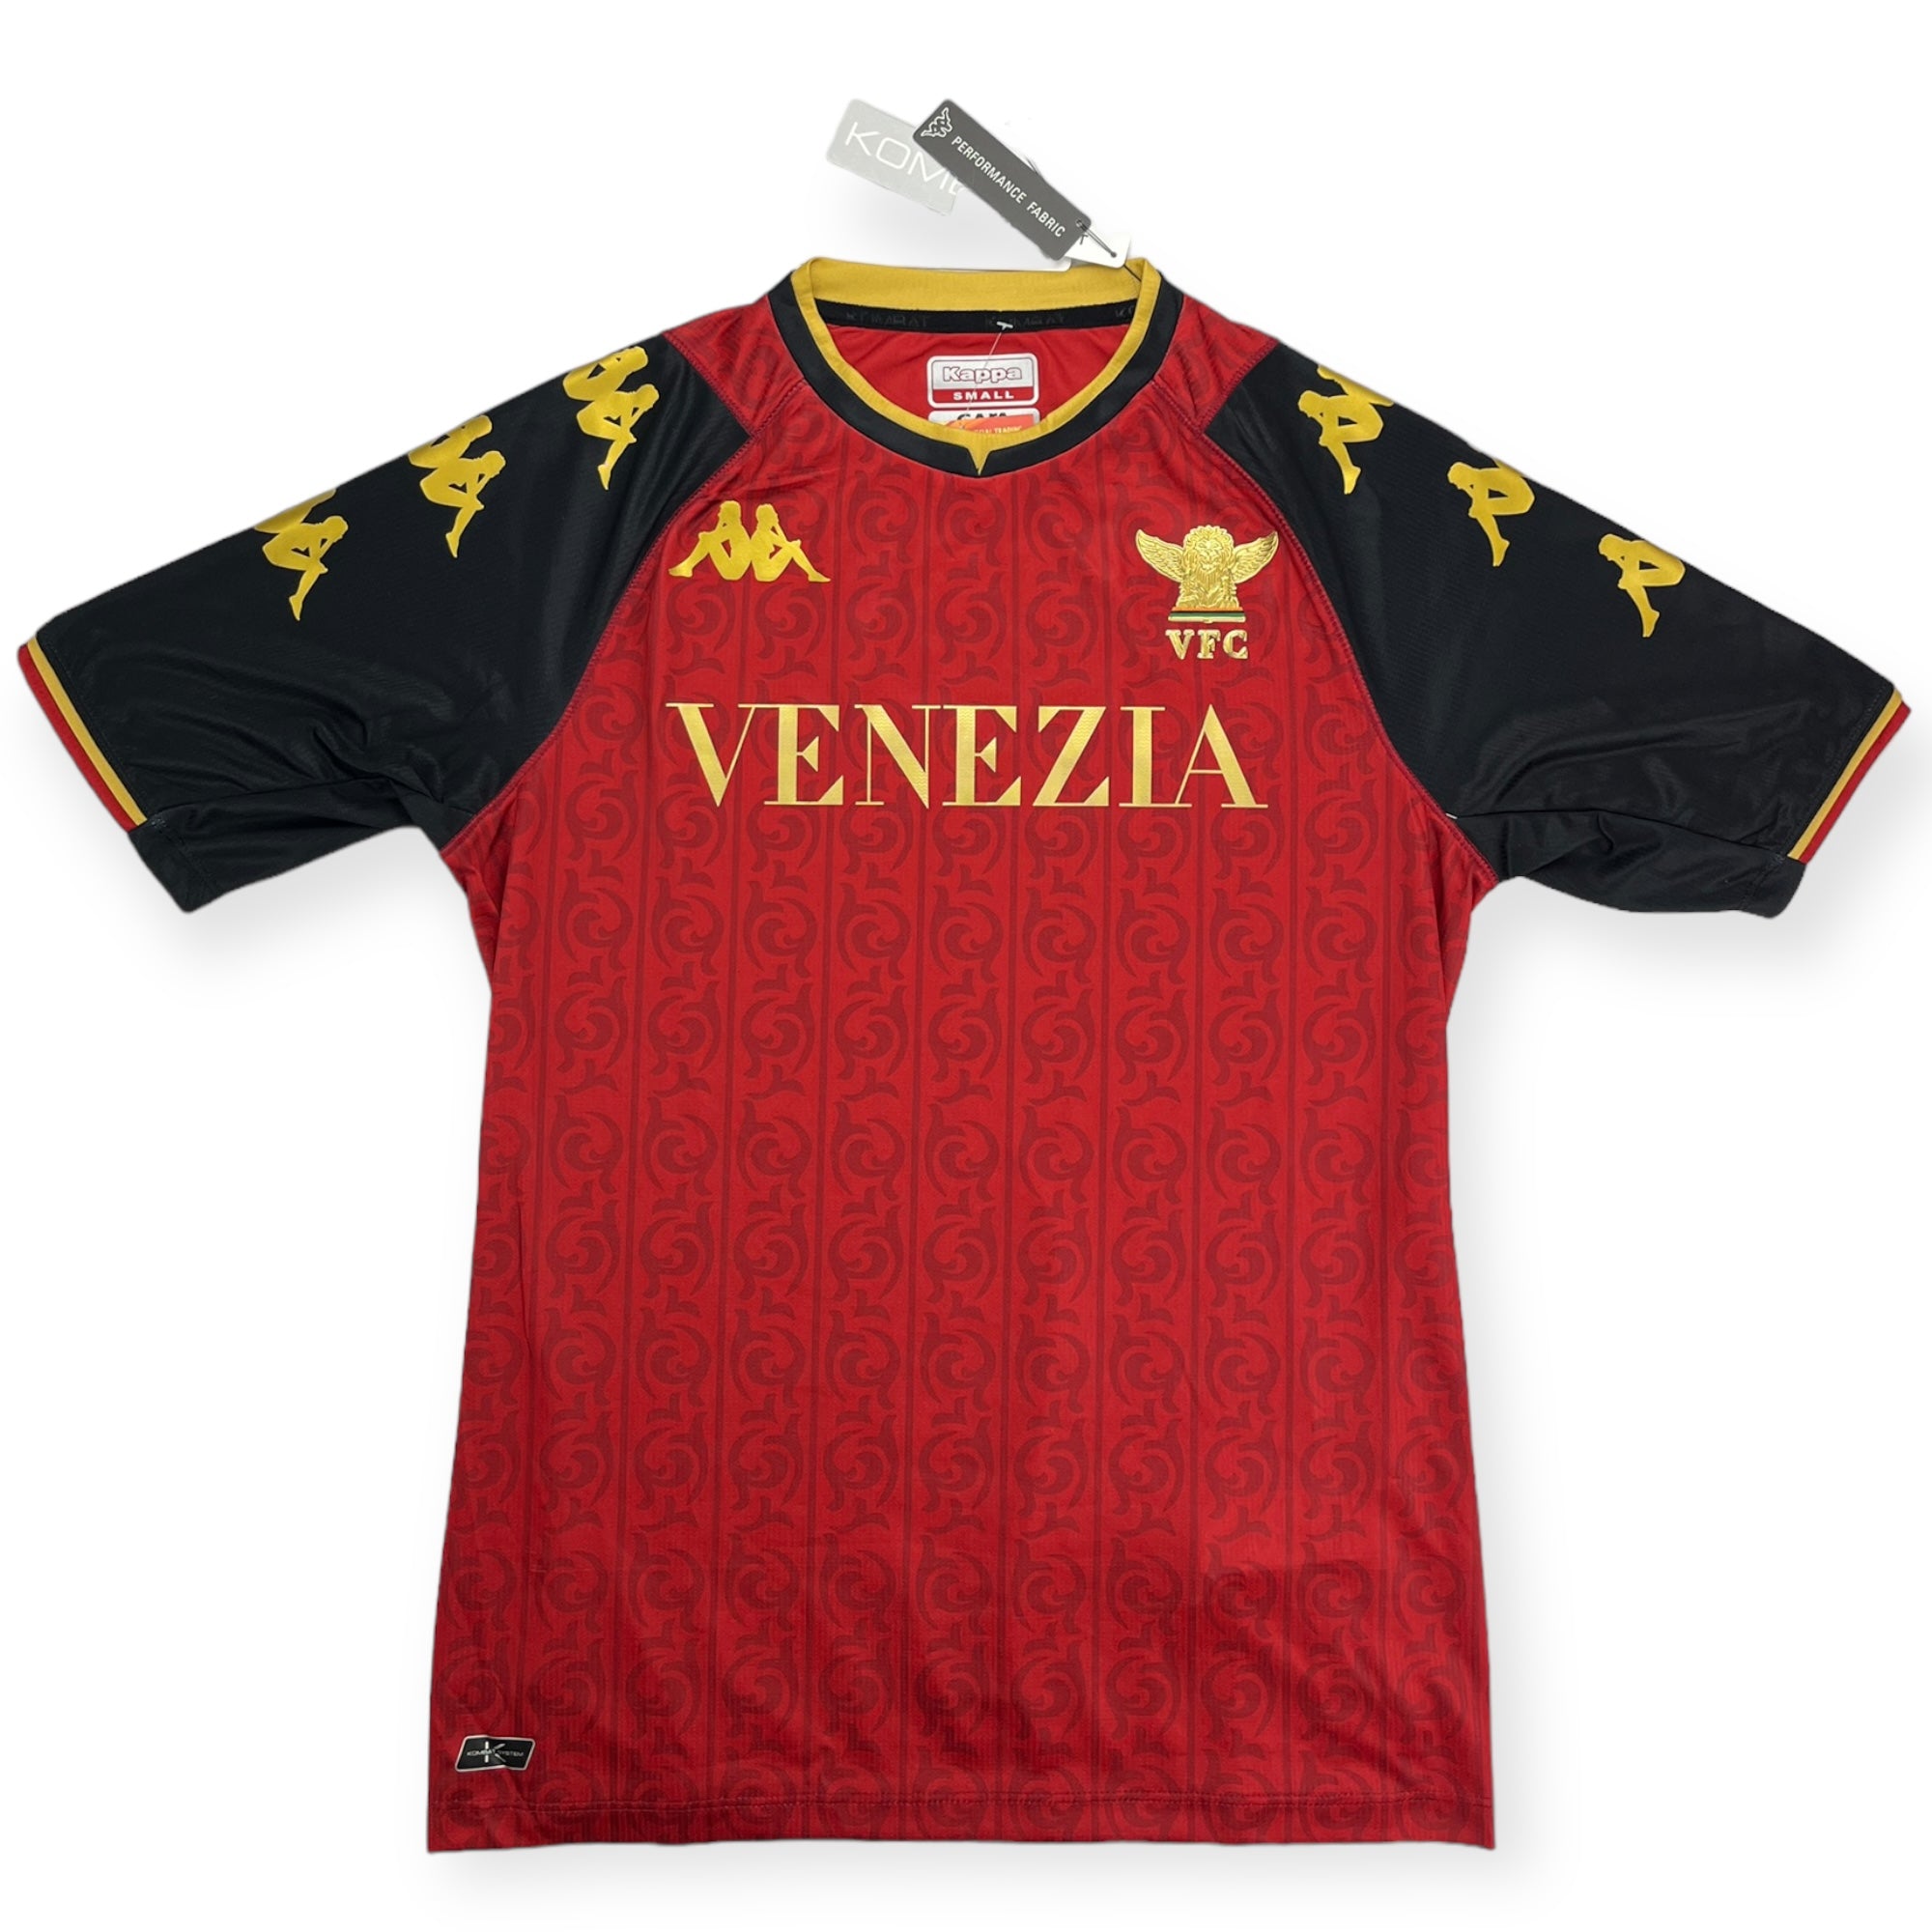 Venezia 2021 Fourth Shirt - Brand New with Tags